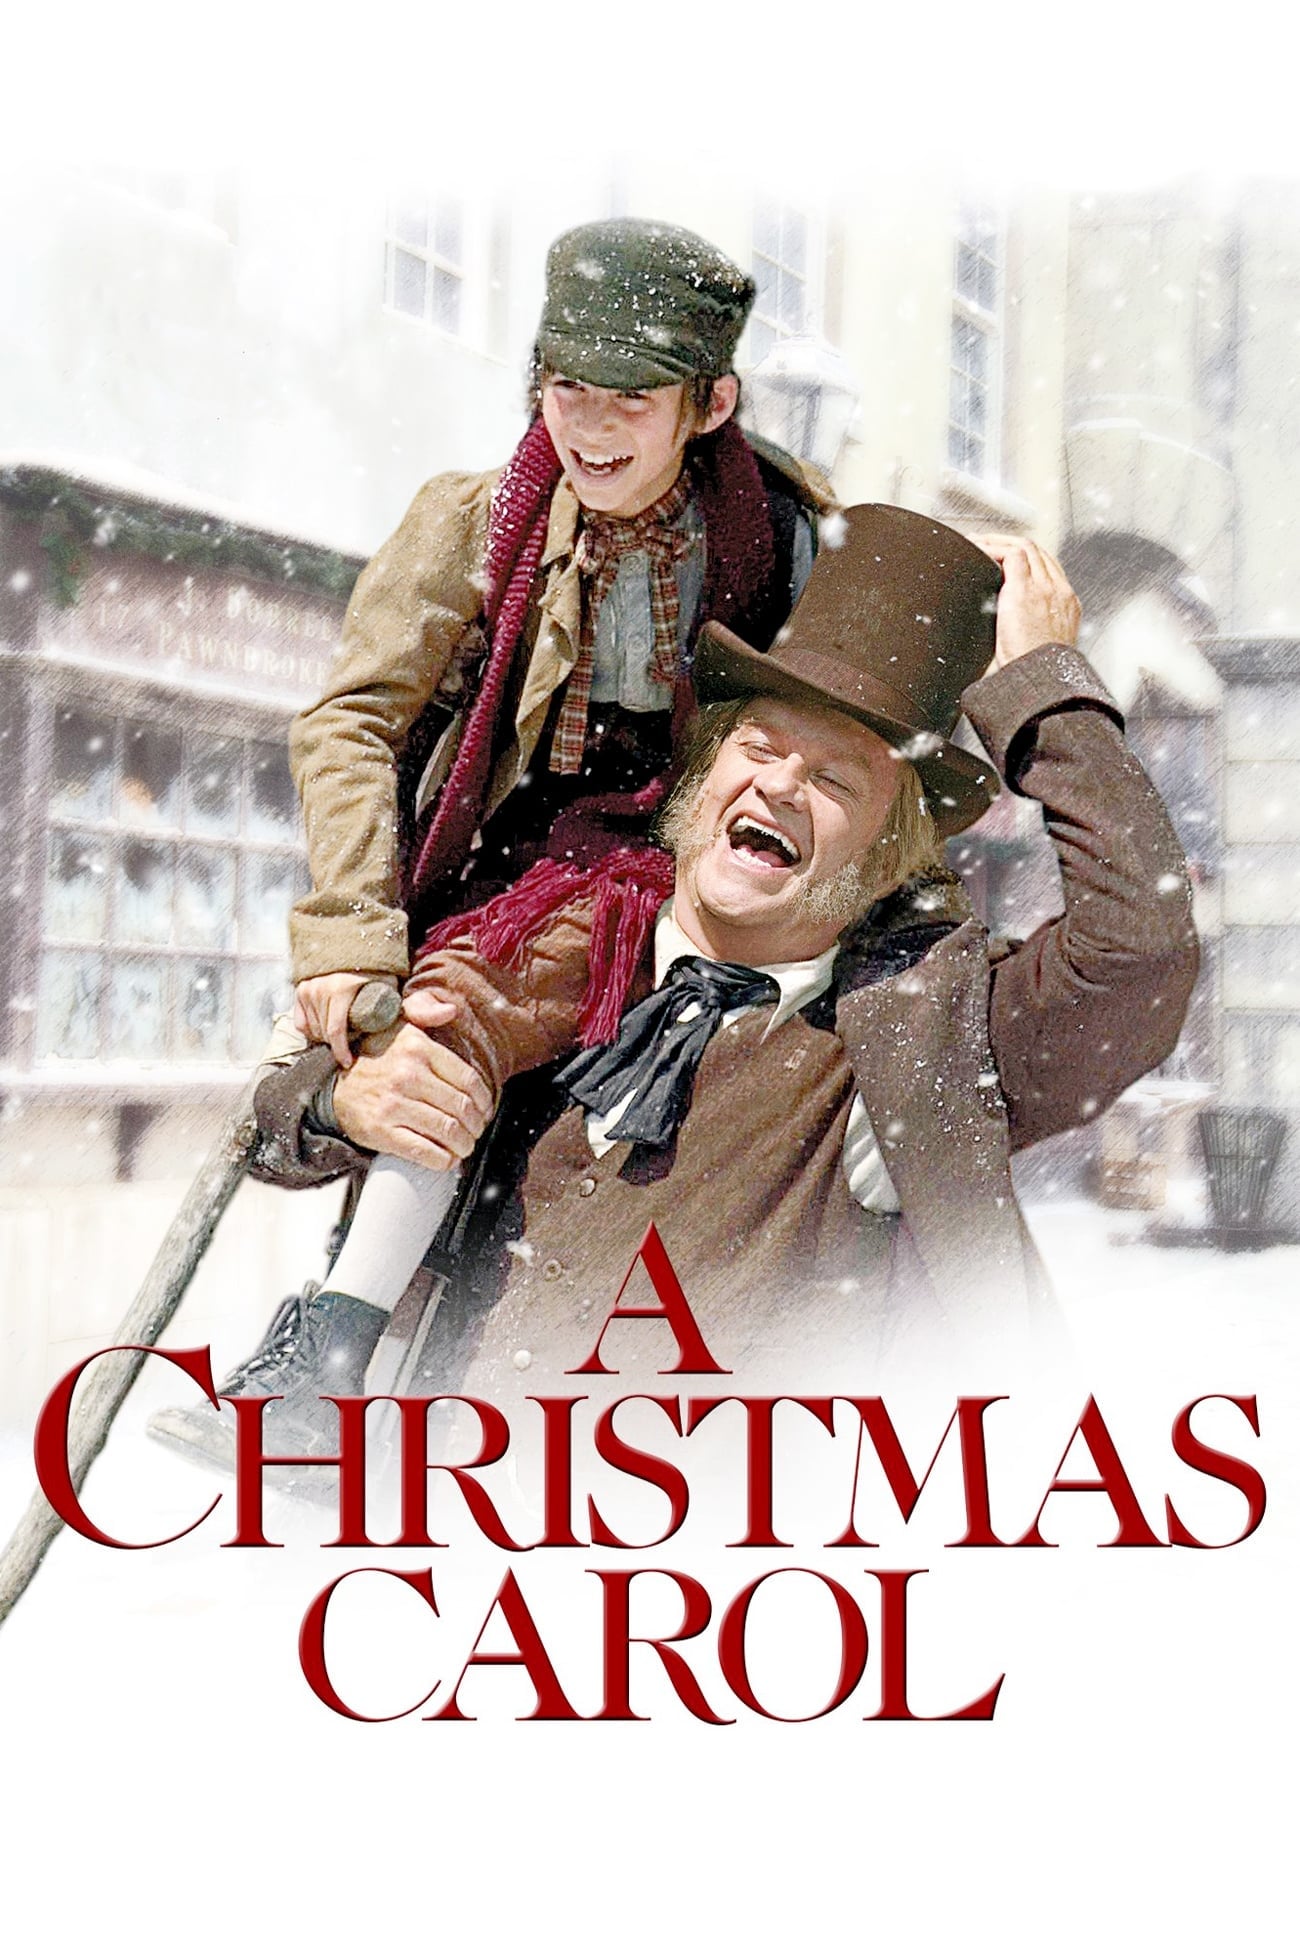 A Christmas Carol (2004)